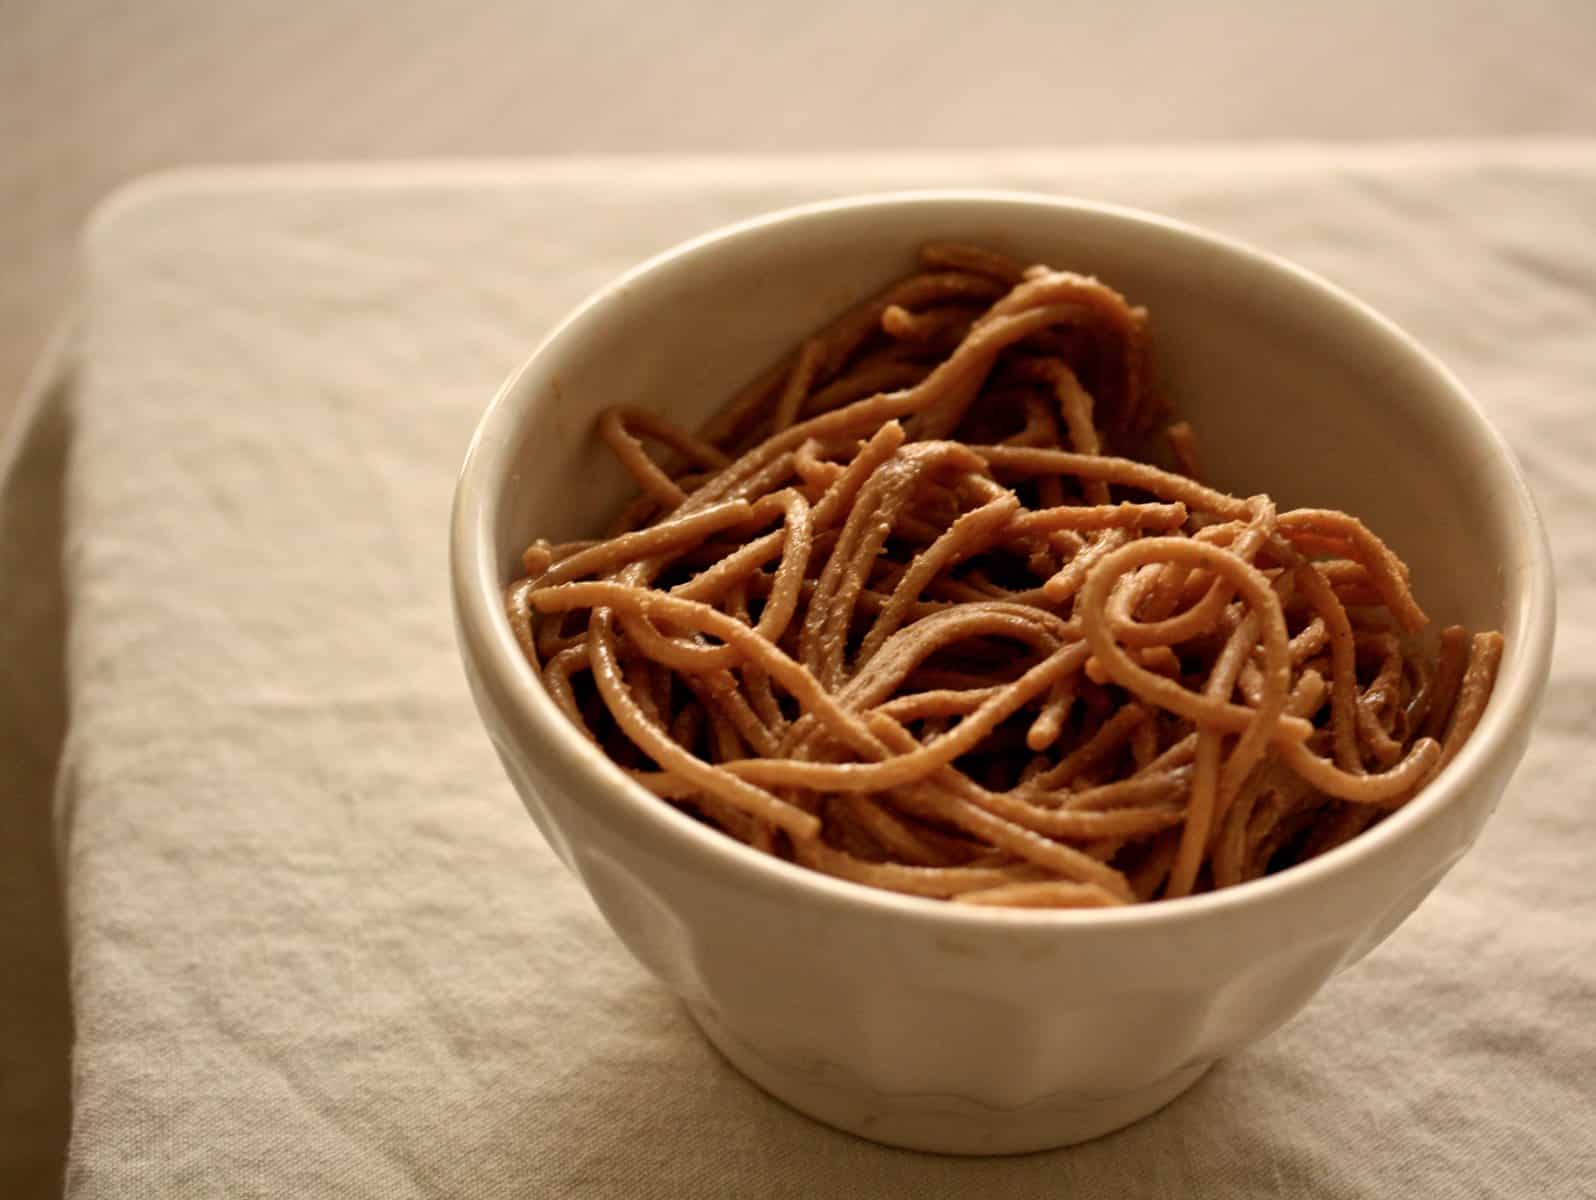 Peanut noodles in a bowl.